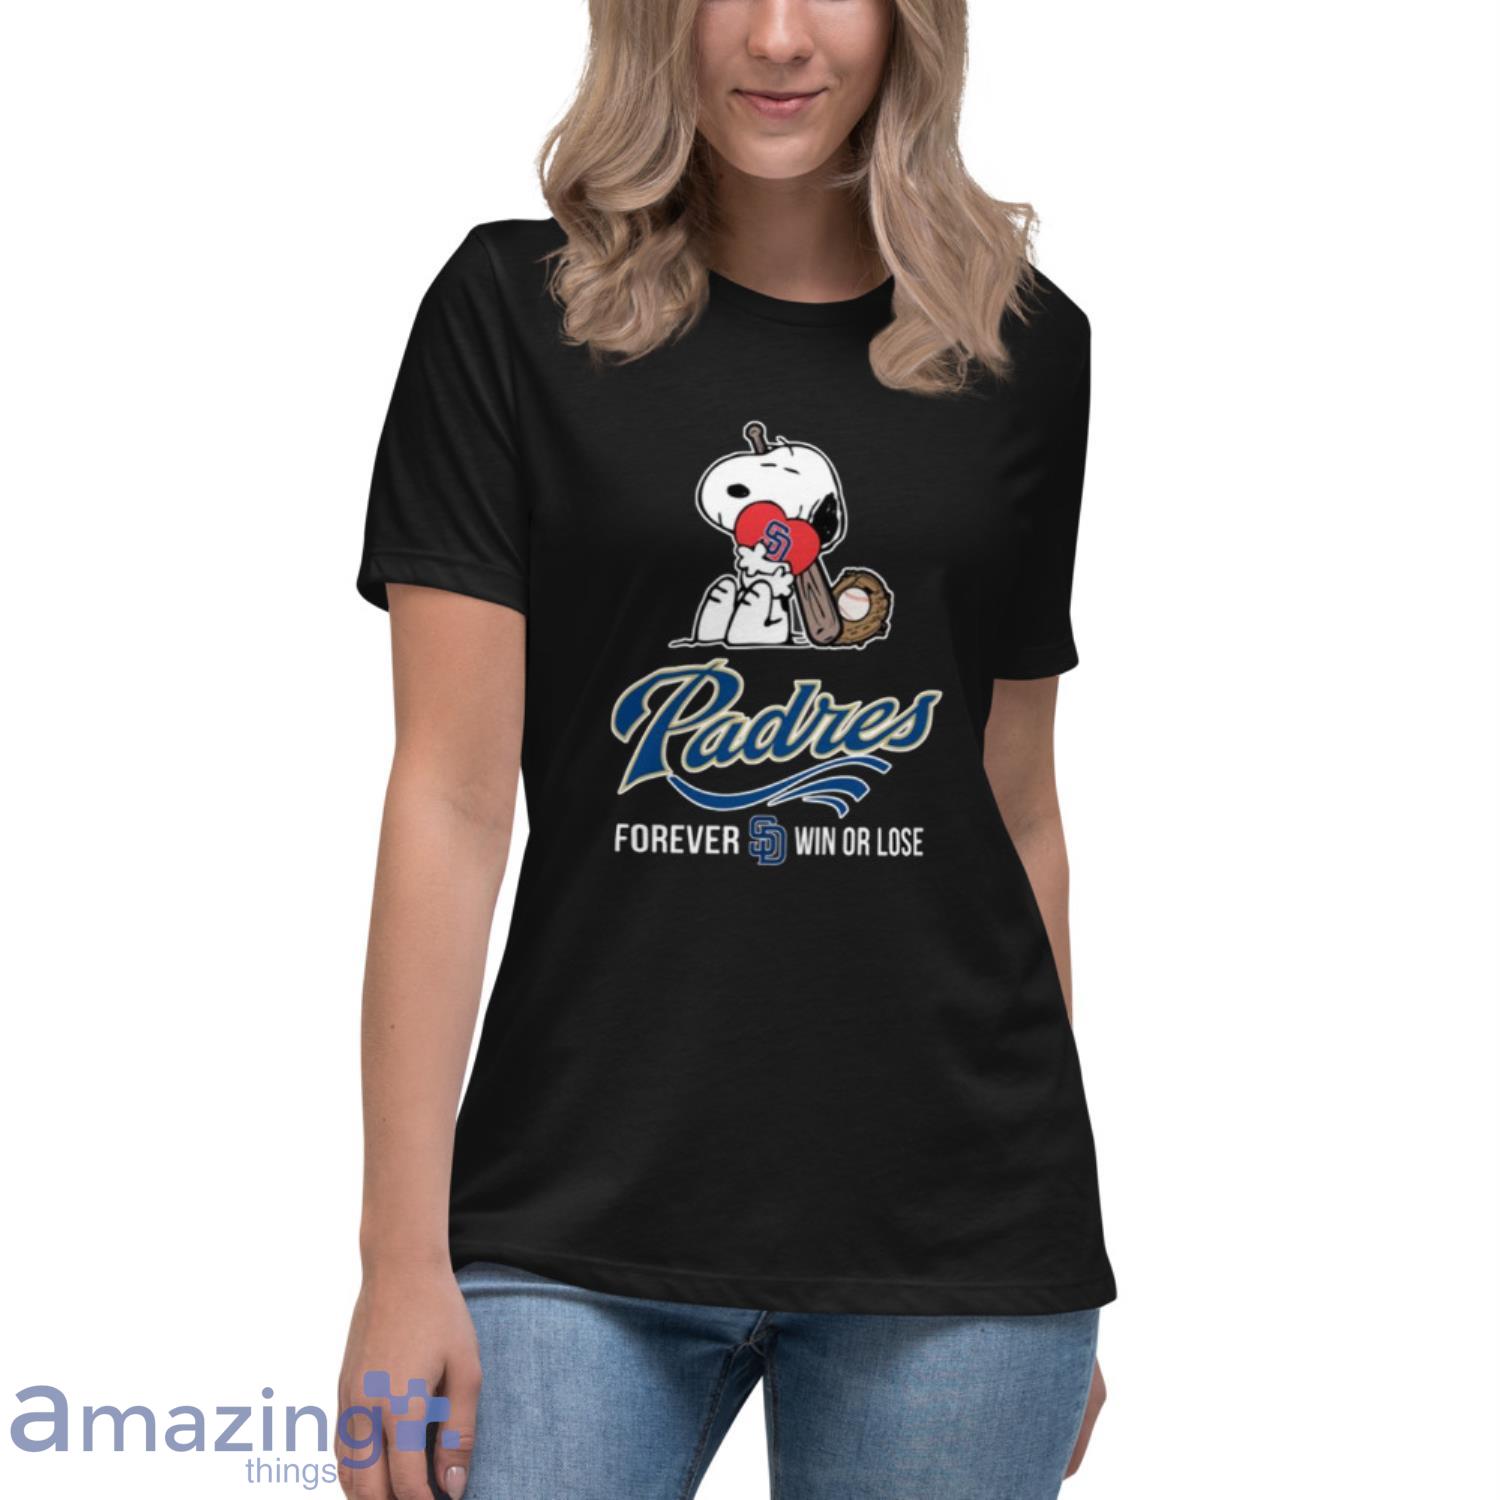 Peanuts Snoopy Baseball Sportswear Women's T-Shirt